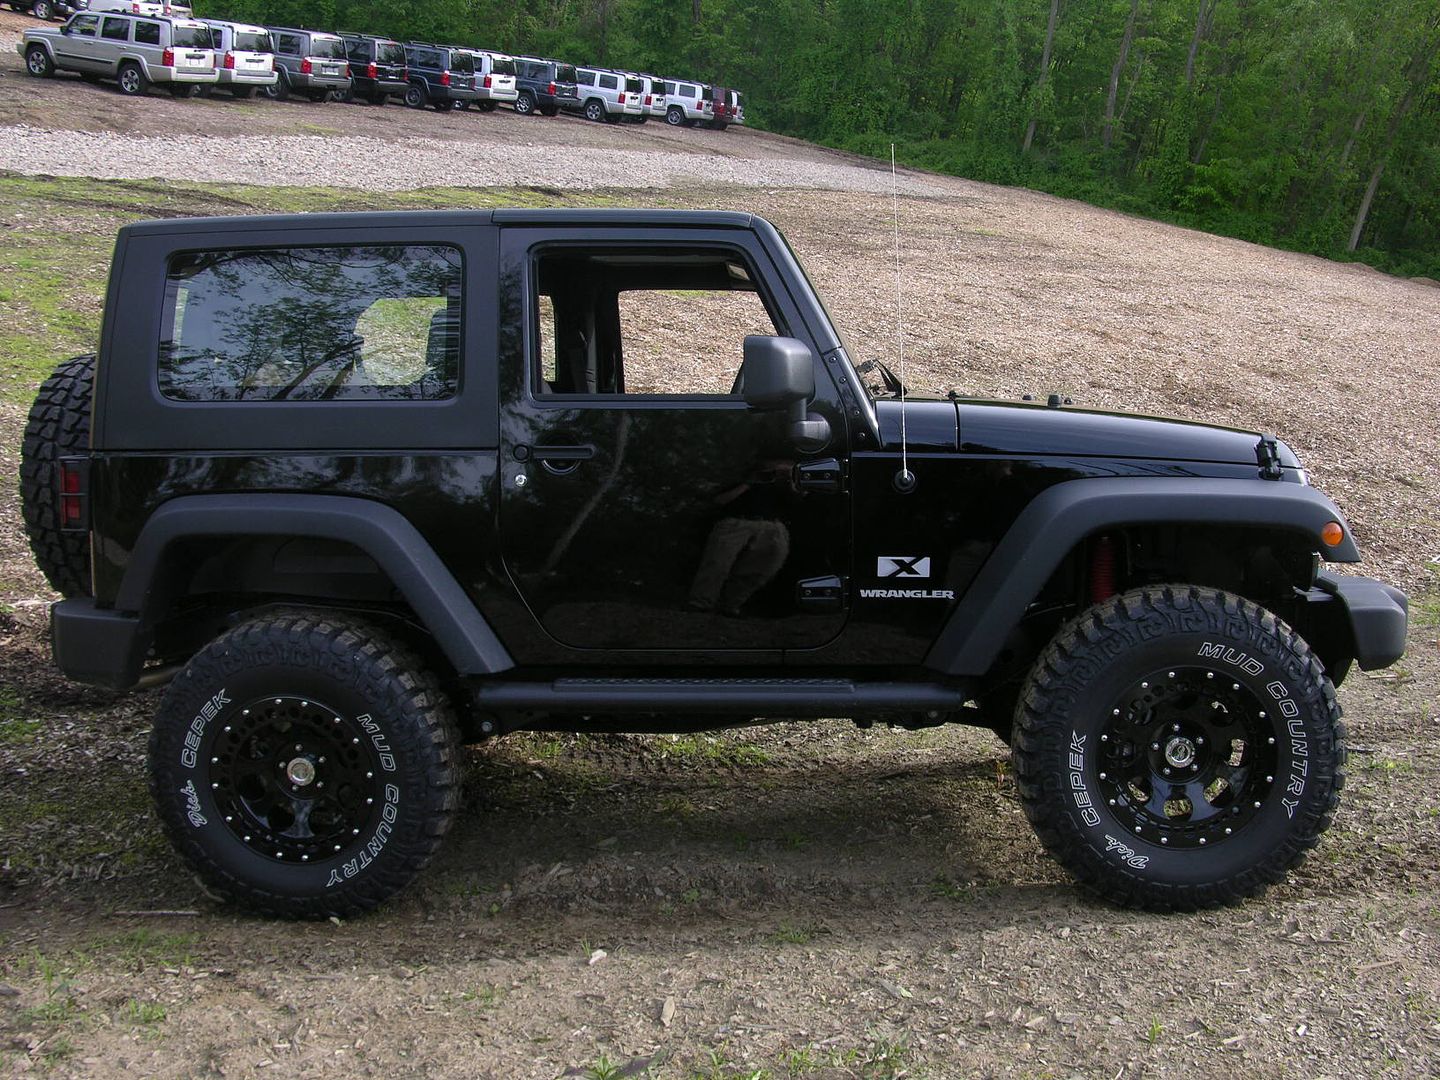 A Black Jeep